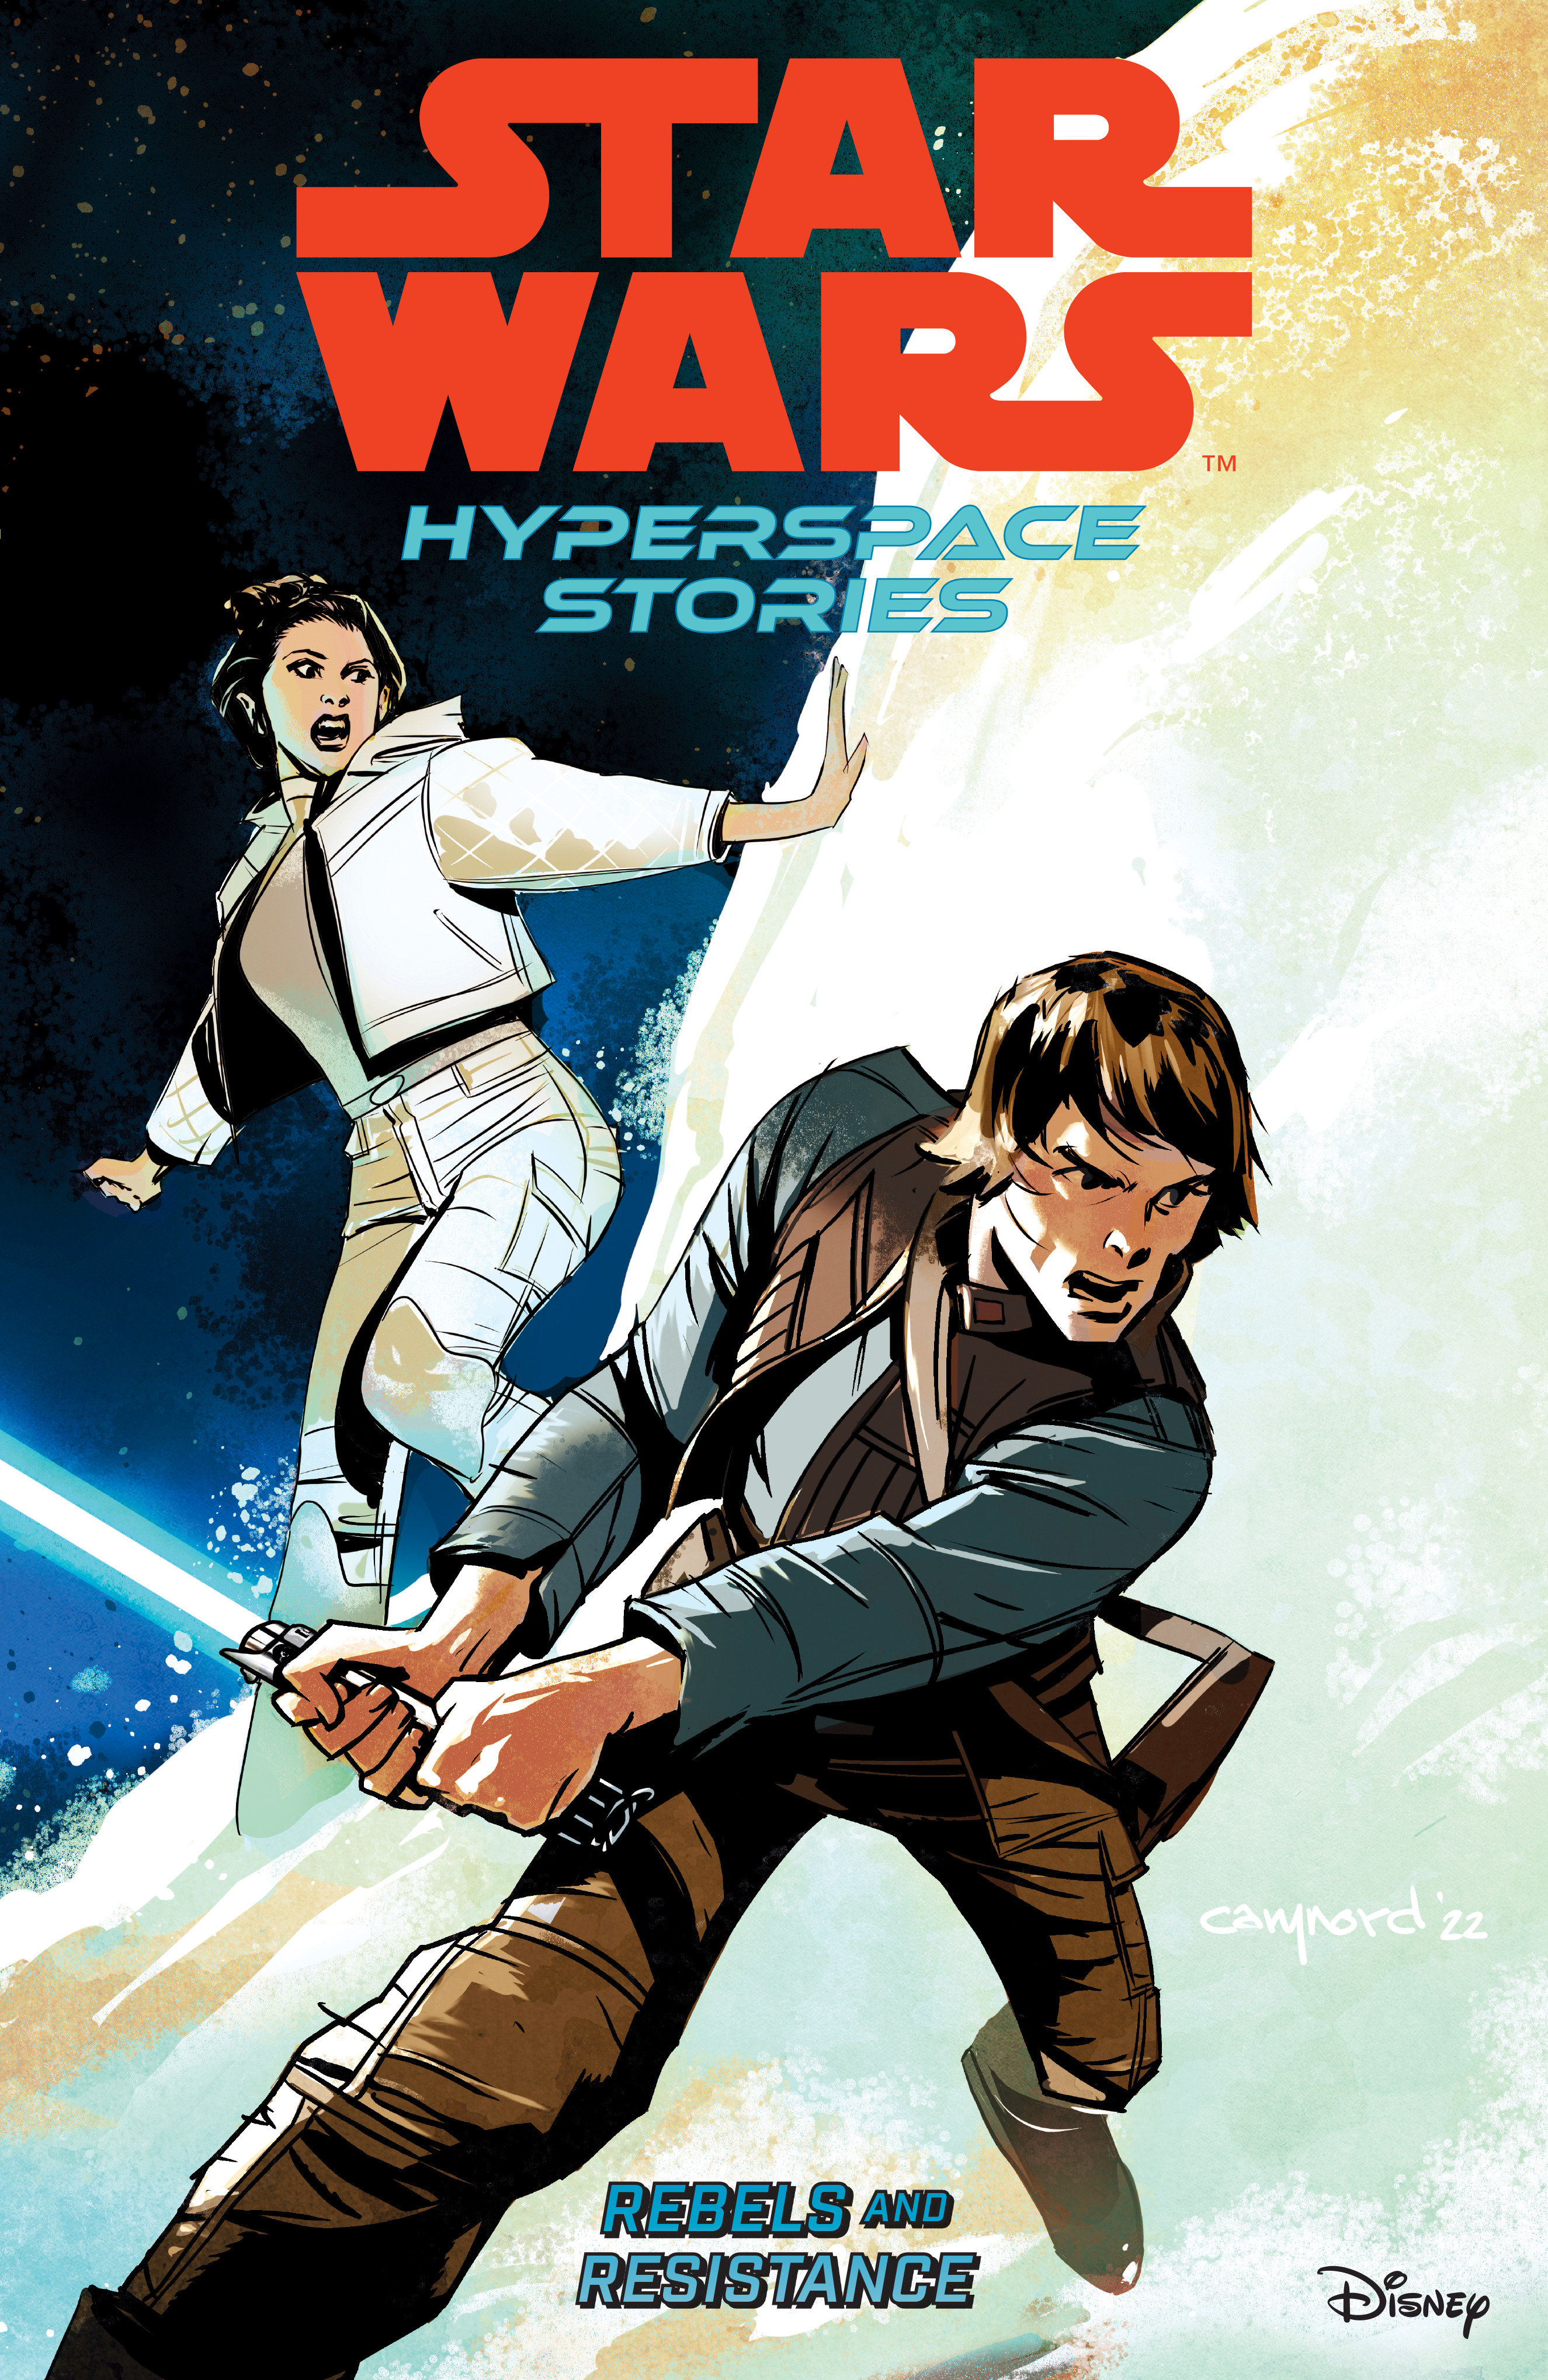 Star Wars Hyperspace Stories Graphic Novel Volume 1